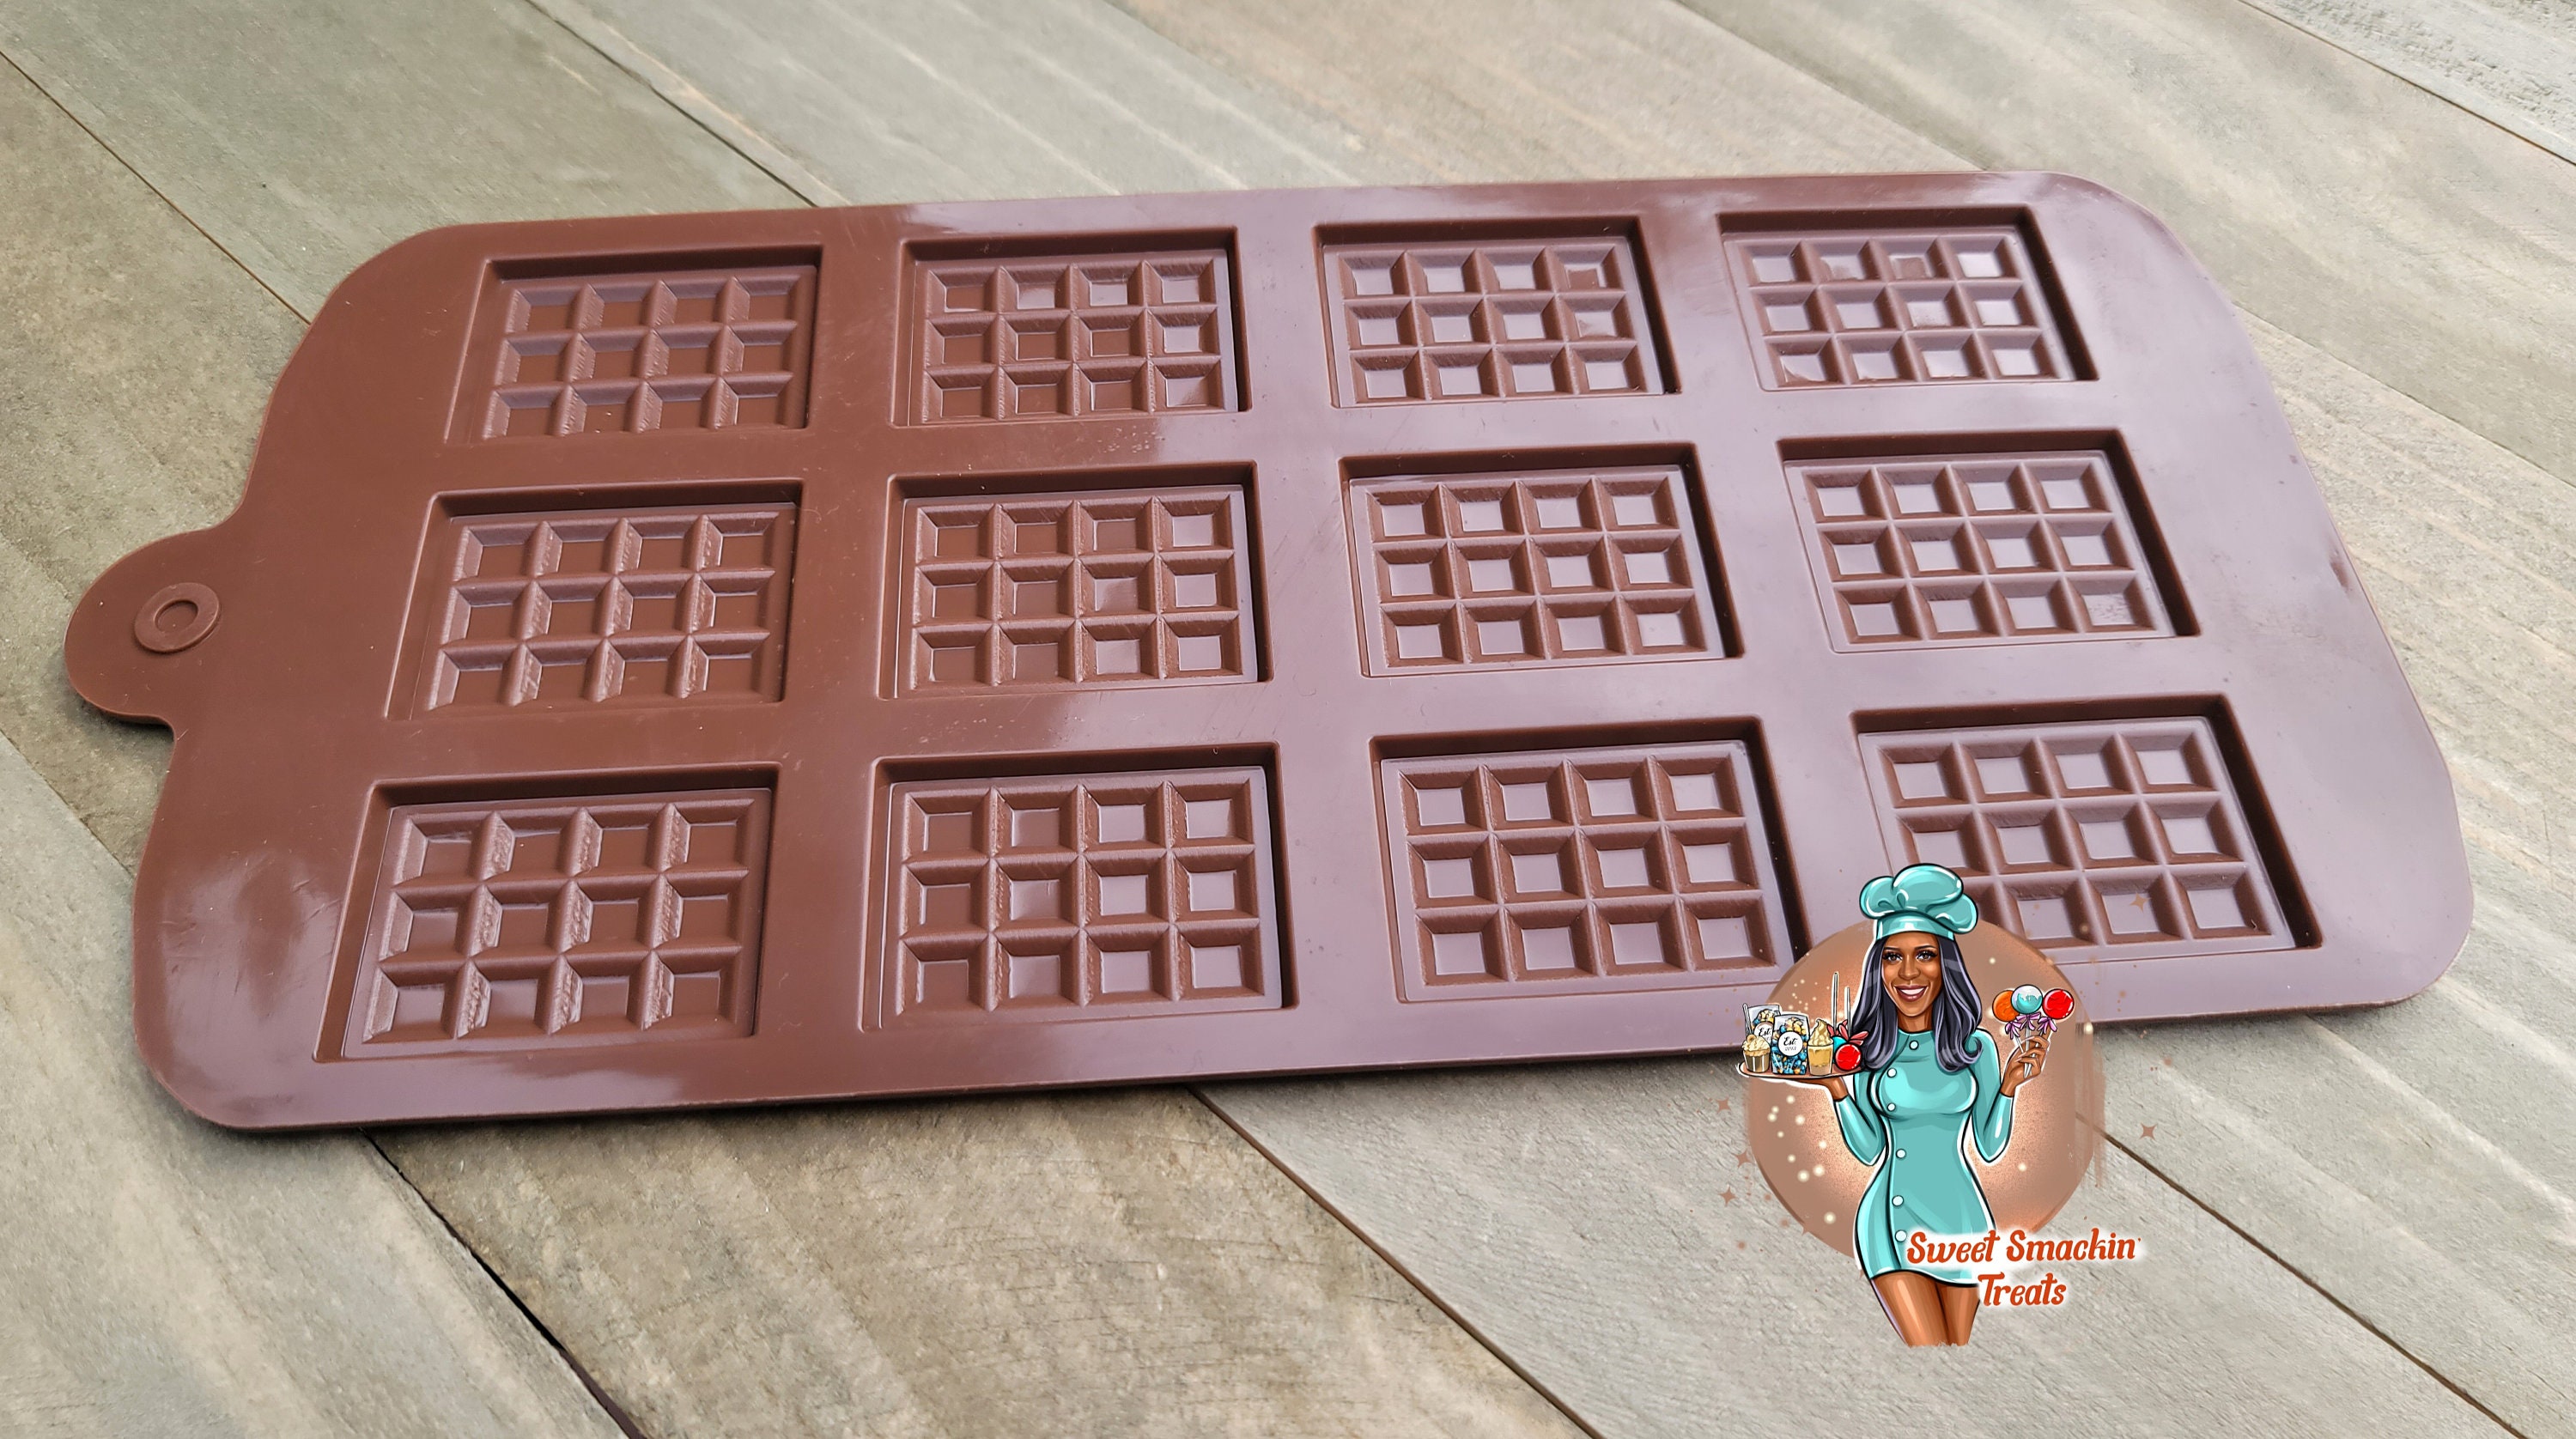 Customize chocolate mold - Giant chocolate bar 7 oz - personalized